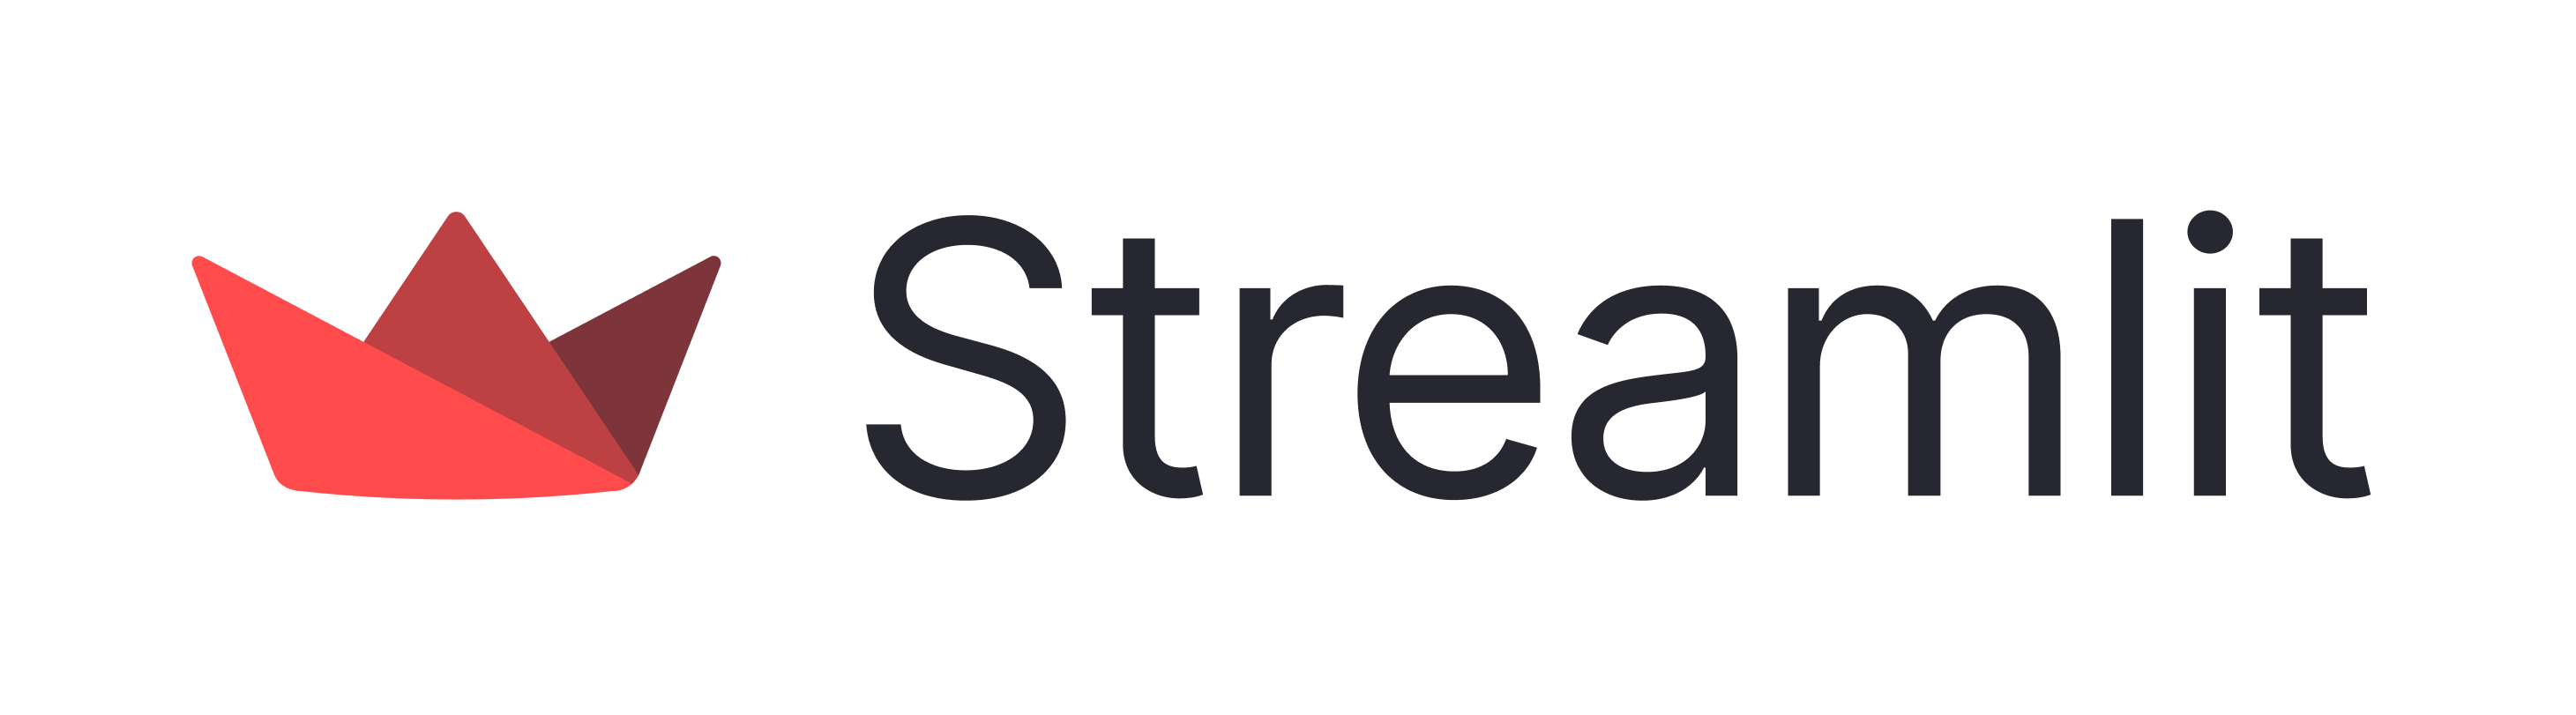 streamlit_logo.png